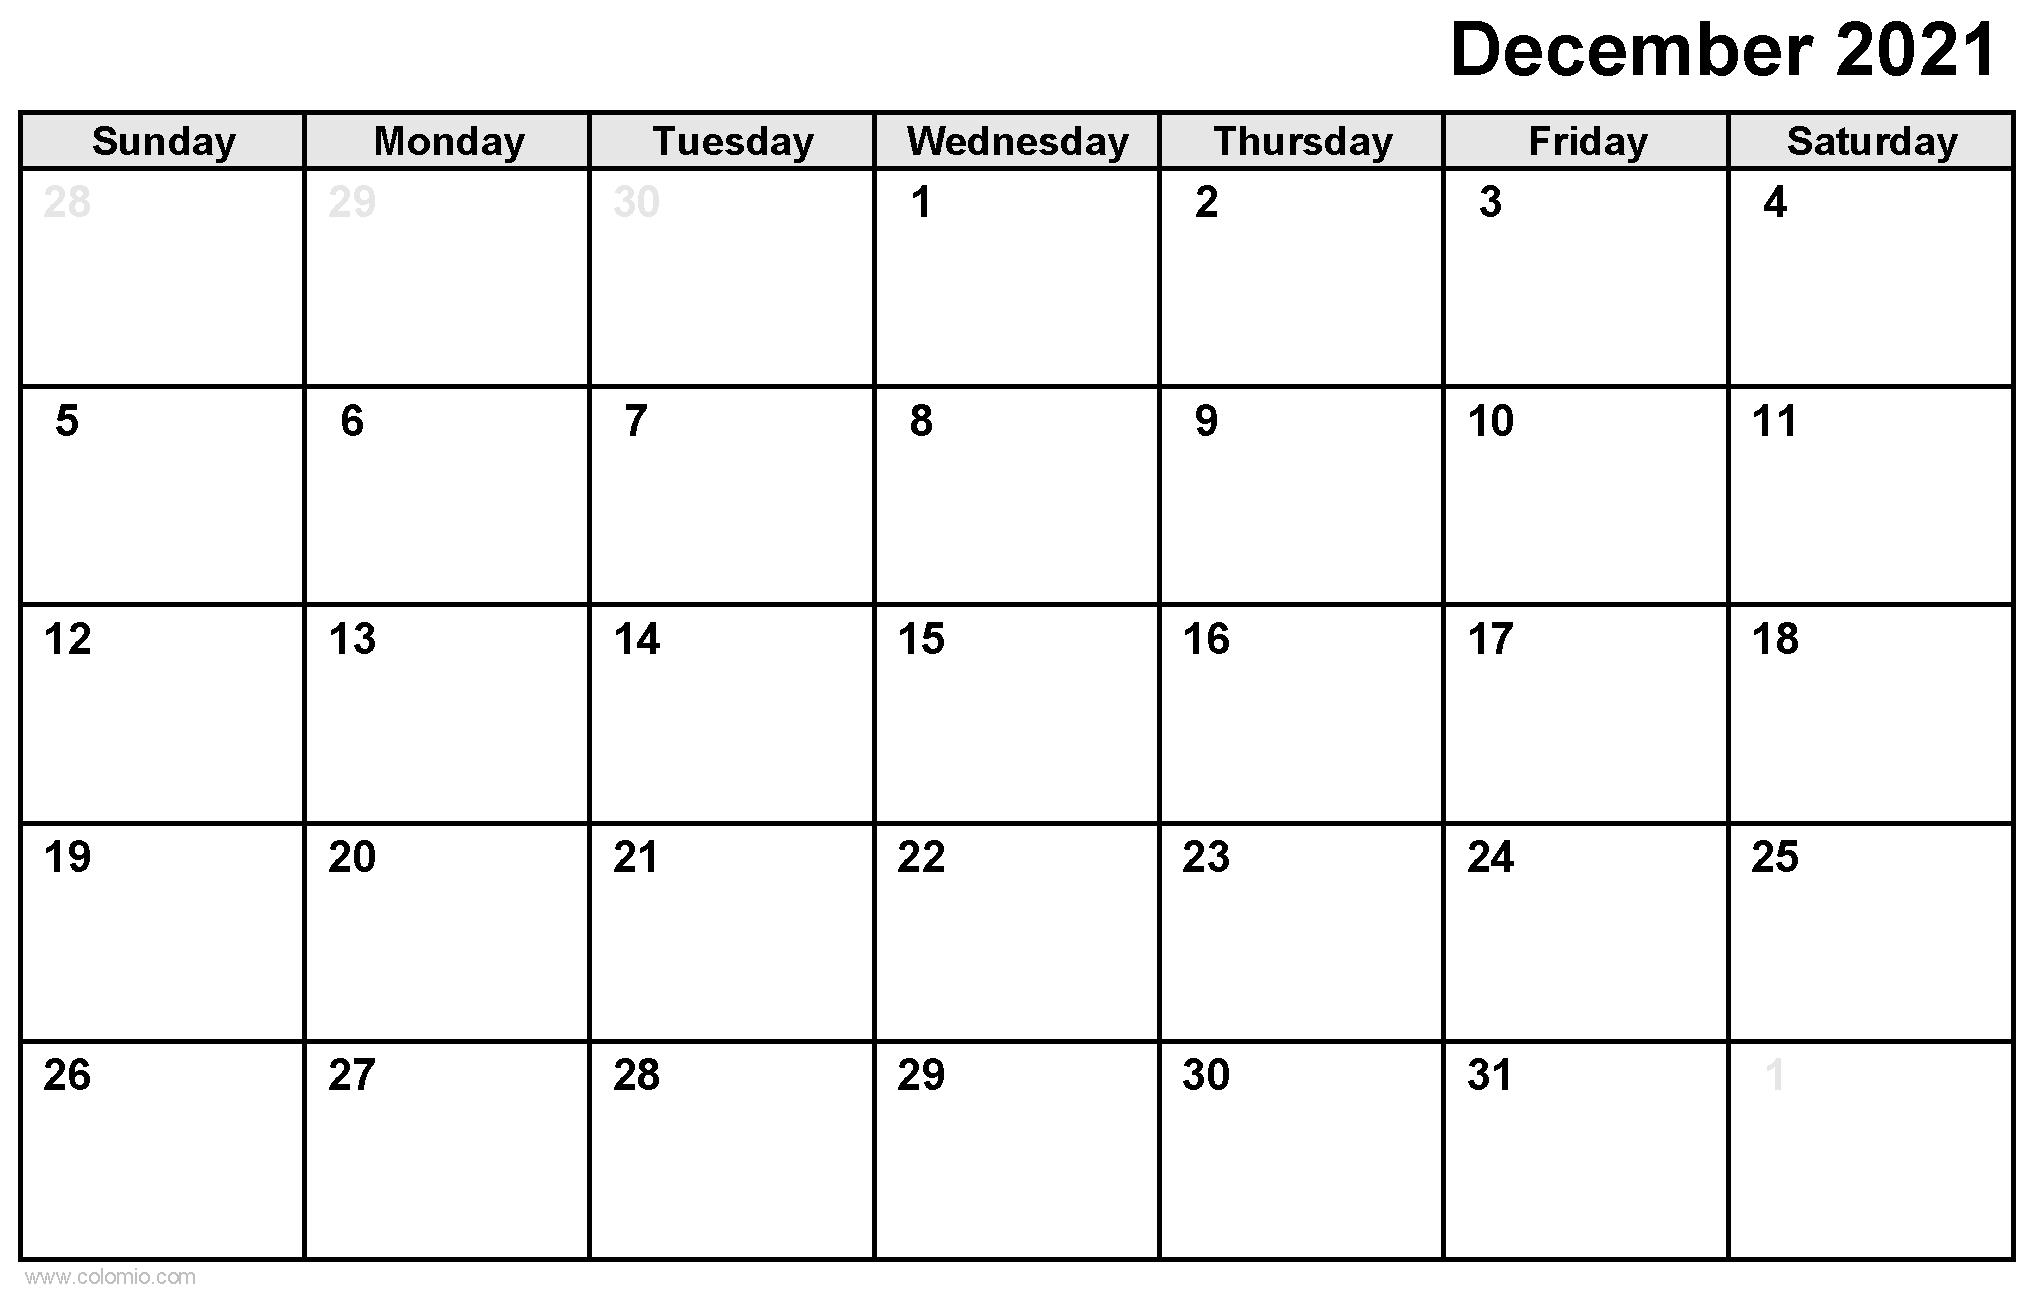 December 2021 Calendar printable